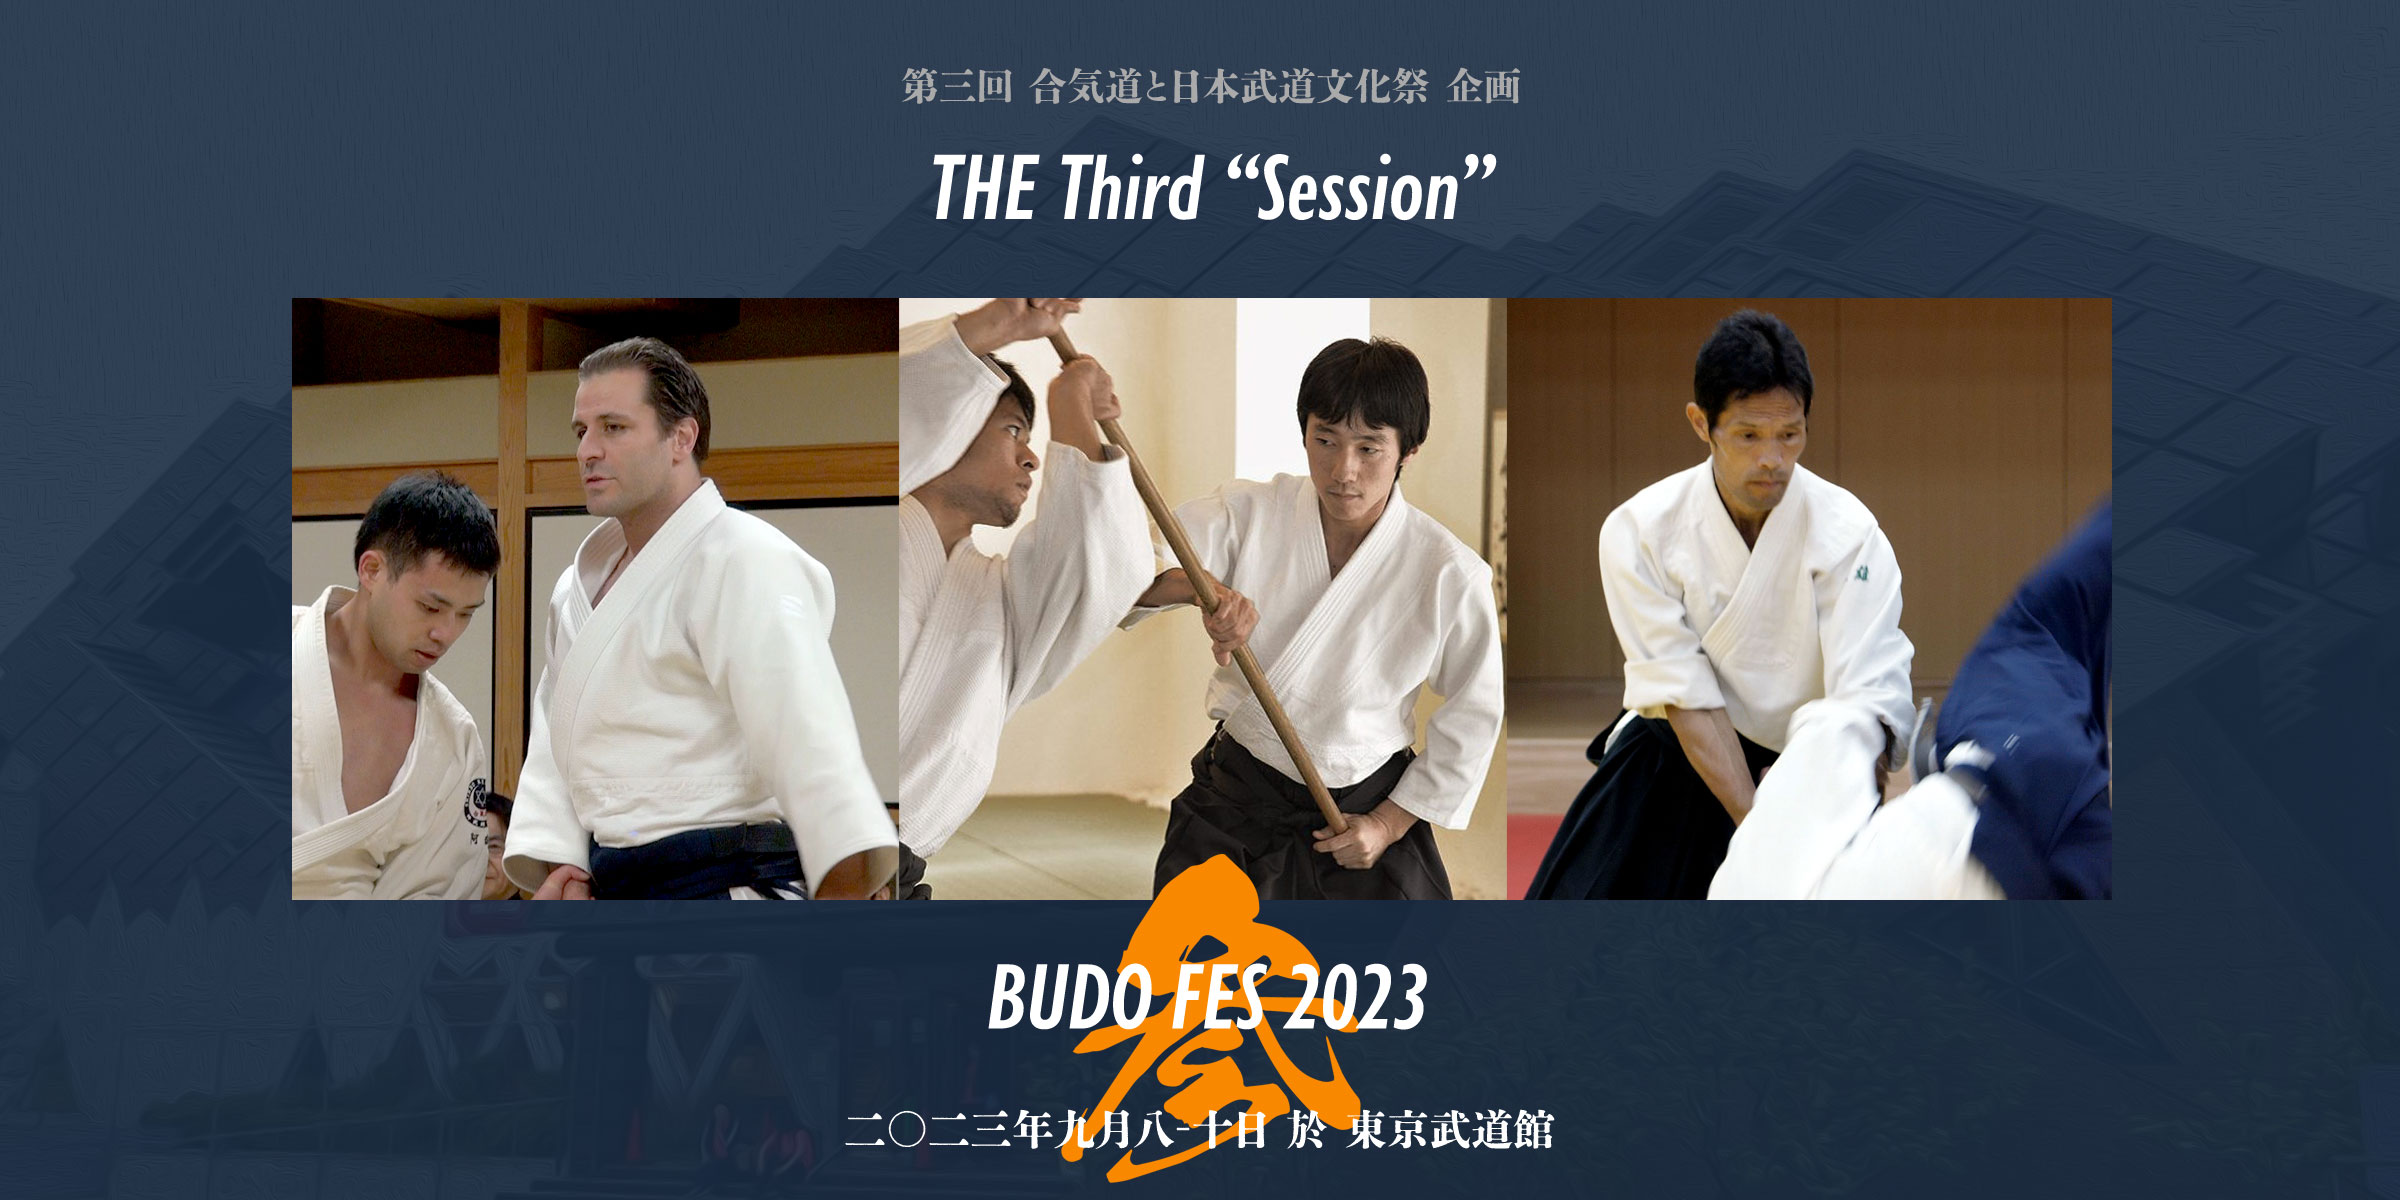 Stage d'Aïkido avec Guillaume Sensei au Tokyo Budokan